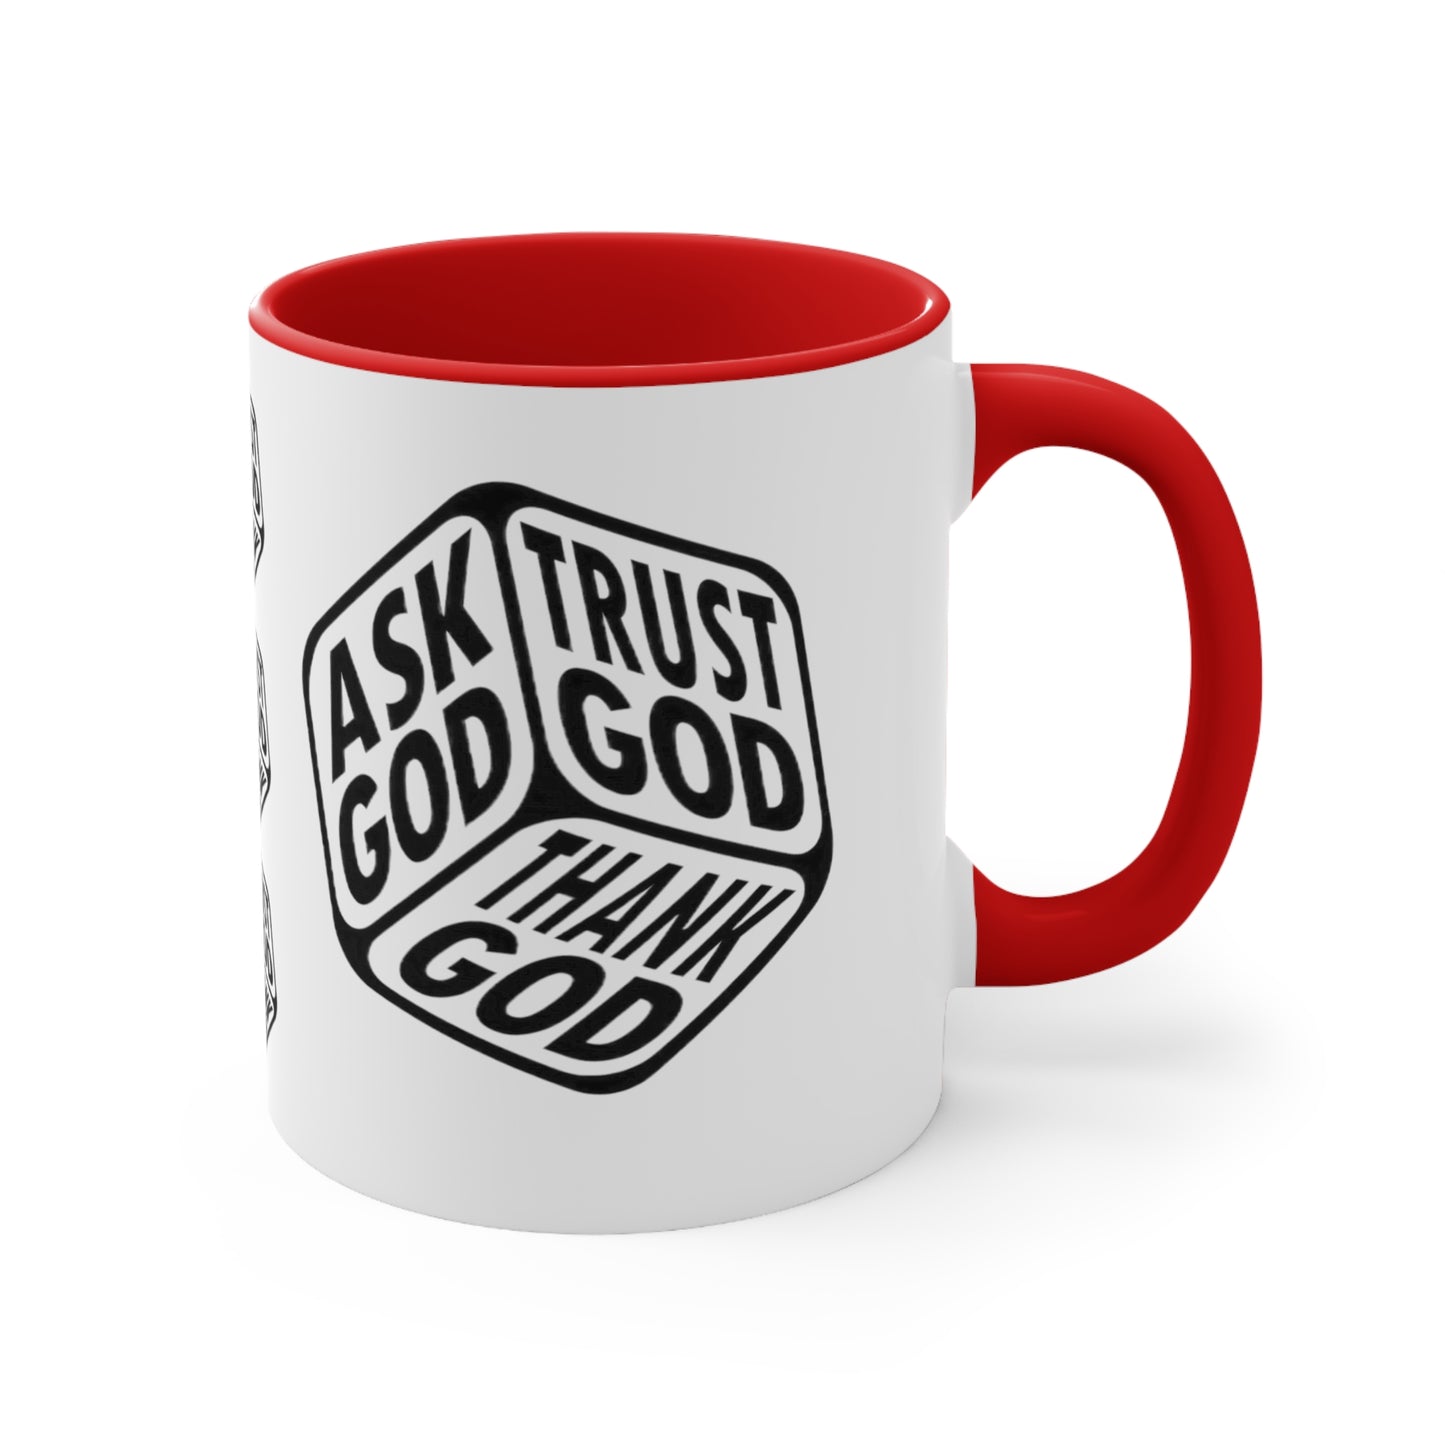 ASK GOD TRUST GOD THANK GOD MUG - Red, Black, Pink, Blue and Navy - MUGSCITY - Free Shipping